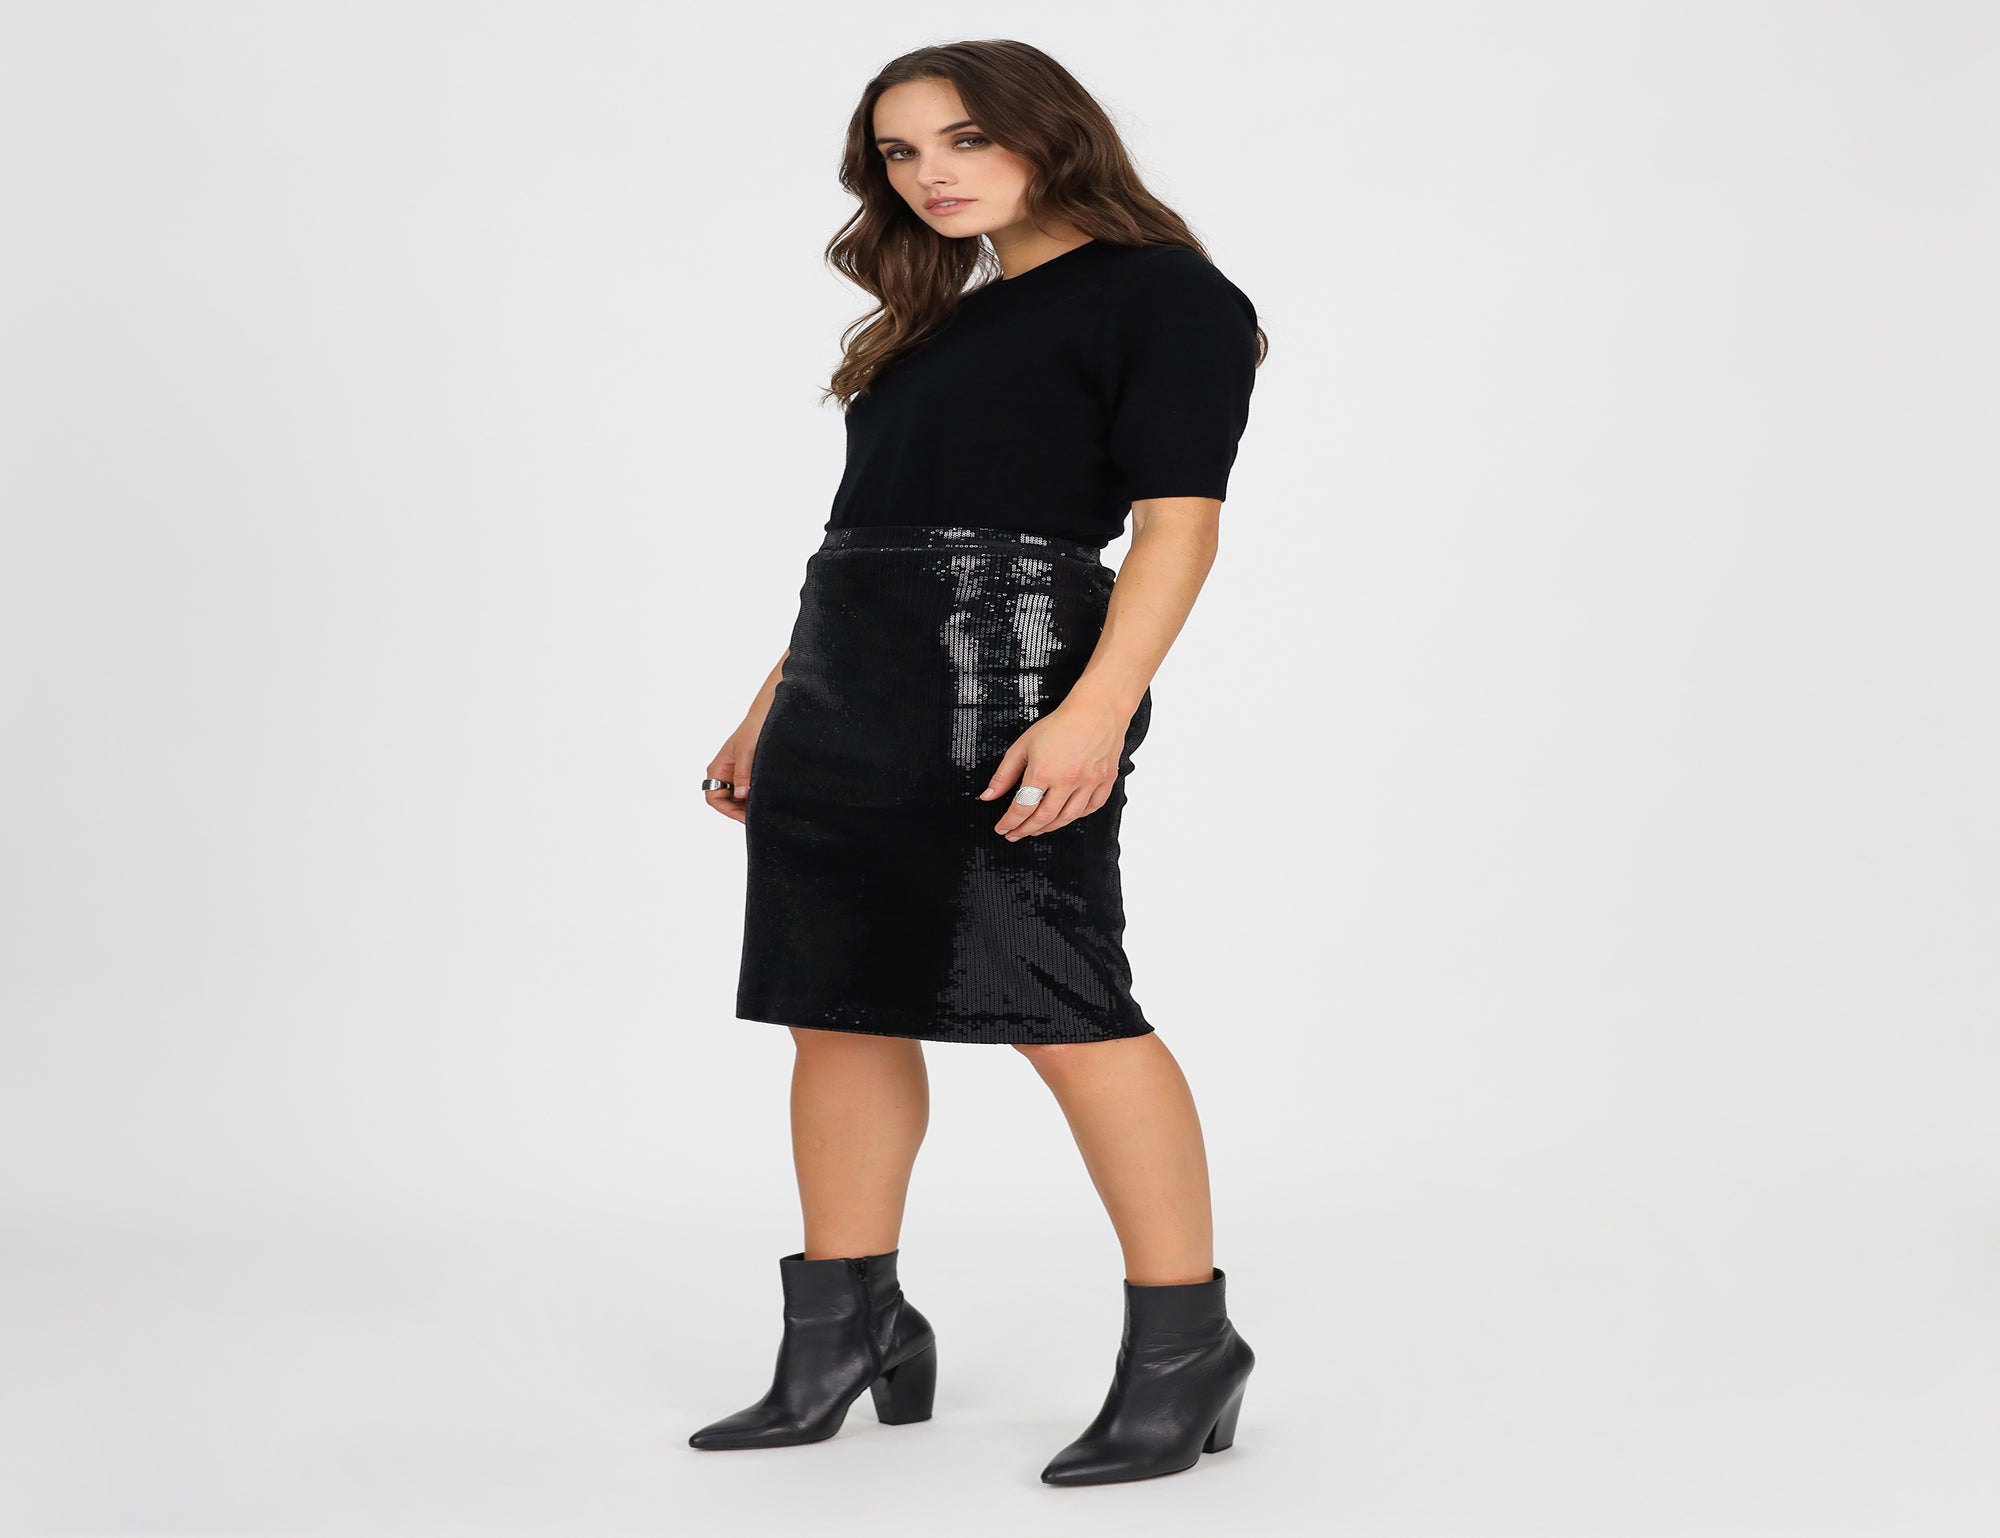 Sequin Knit Pencil Skirt - Black - Skirts - Short - Women's Clothing ...